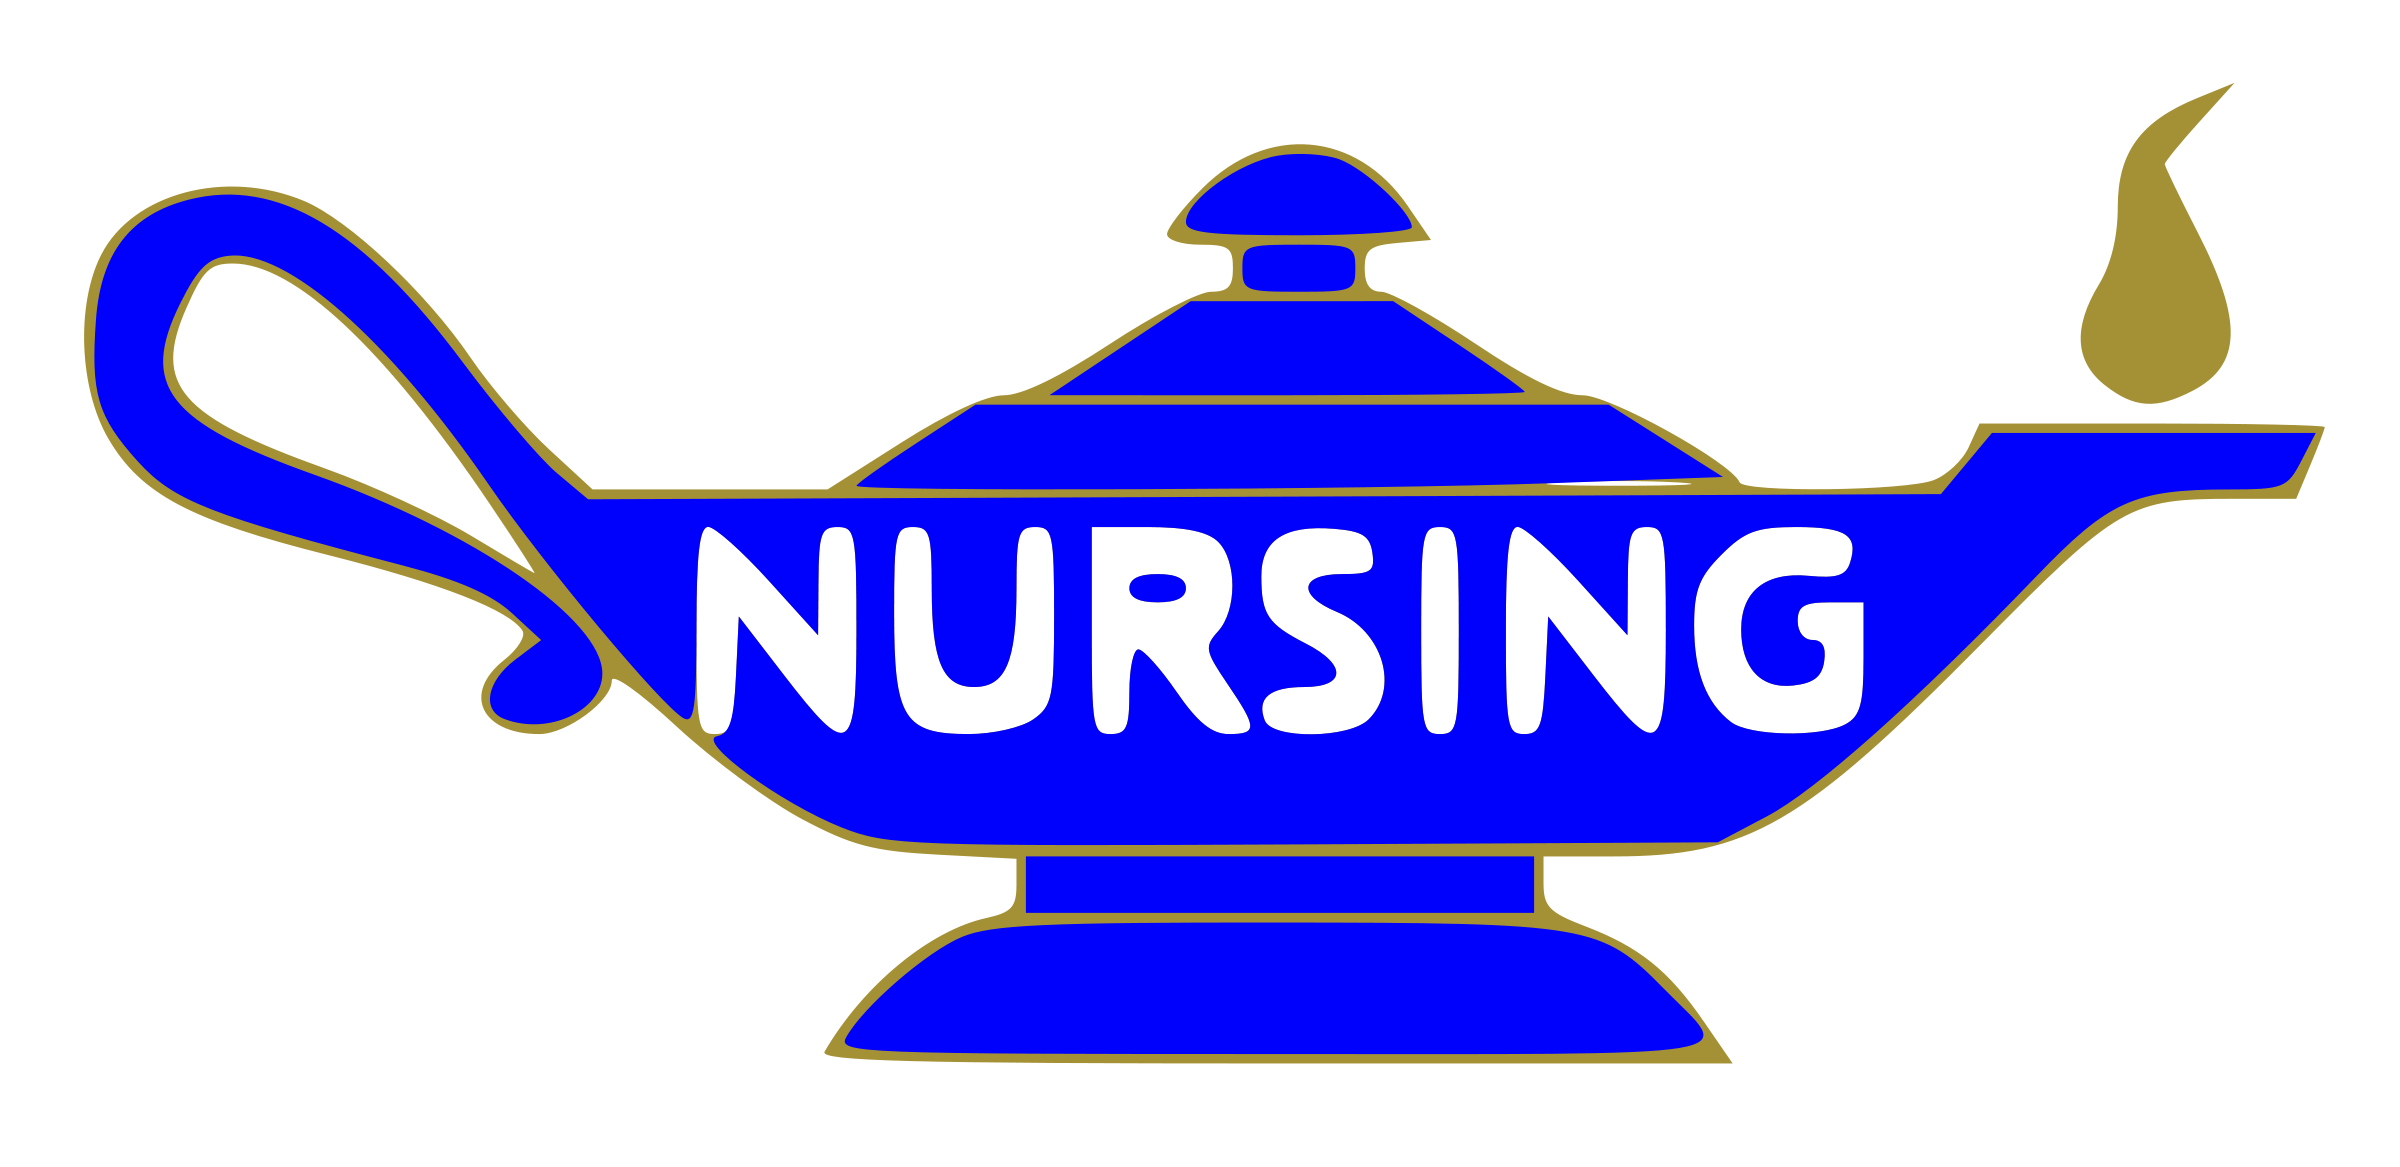 Nursing cliparts 